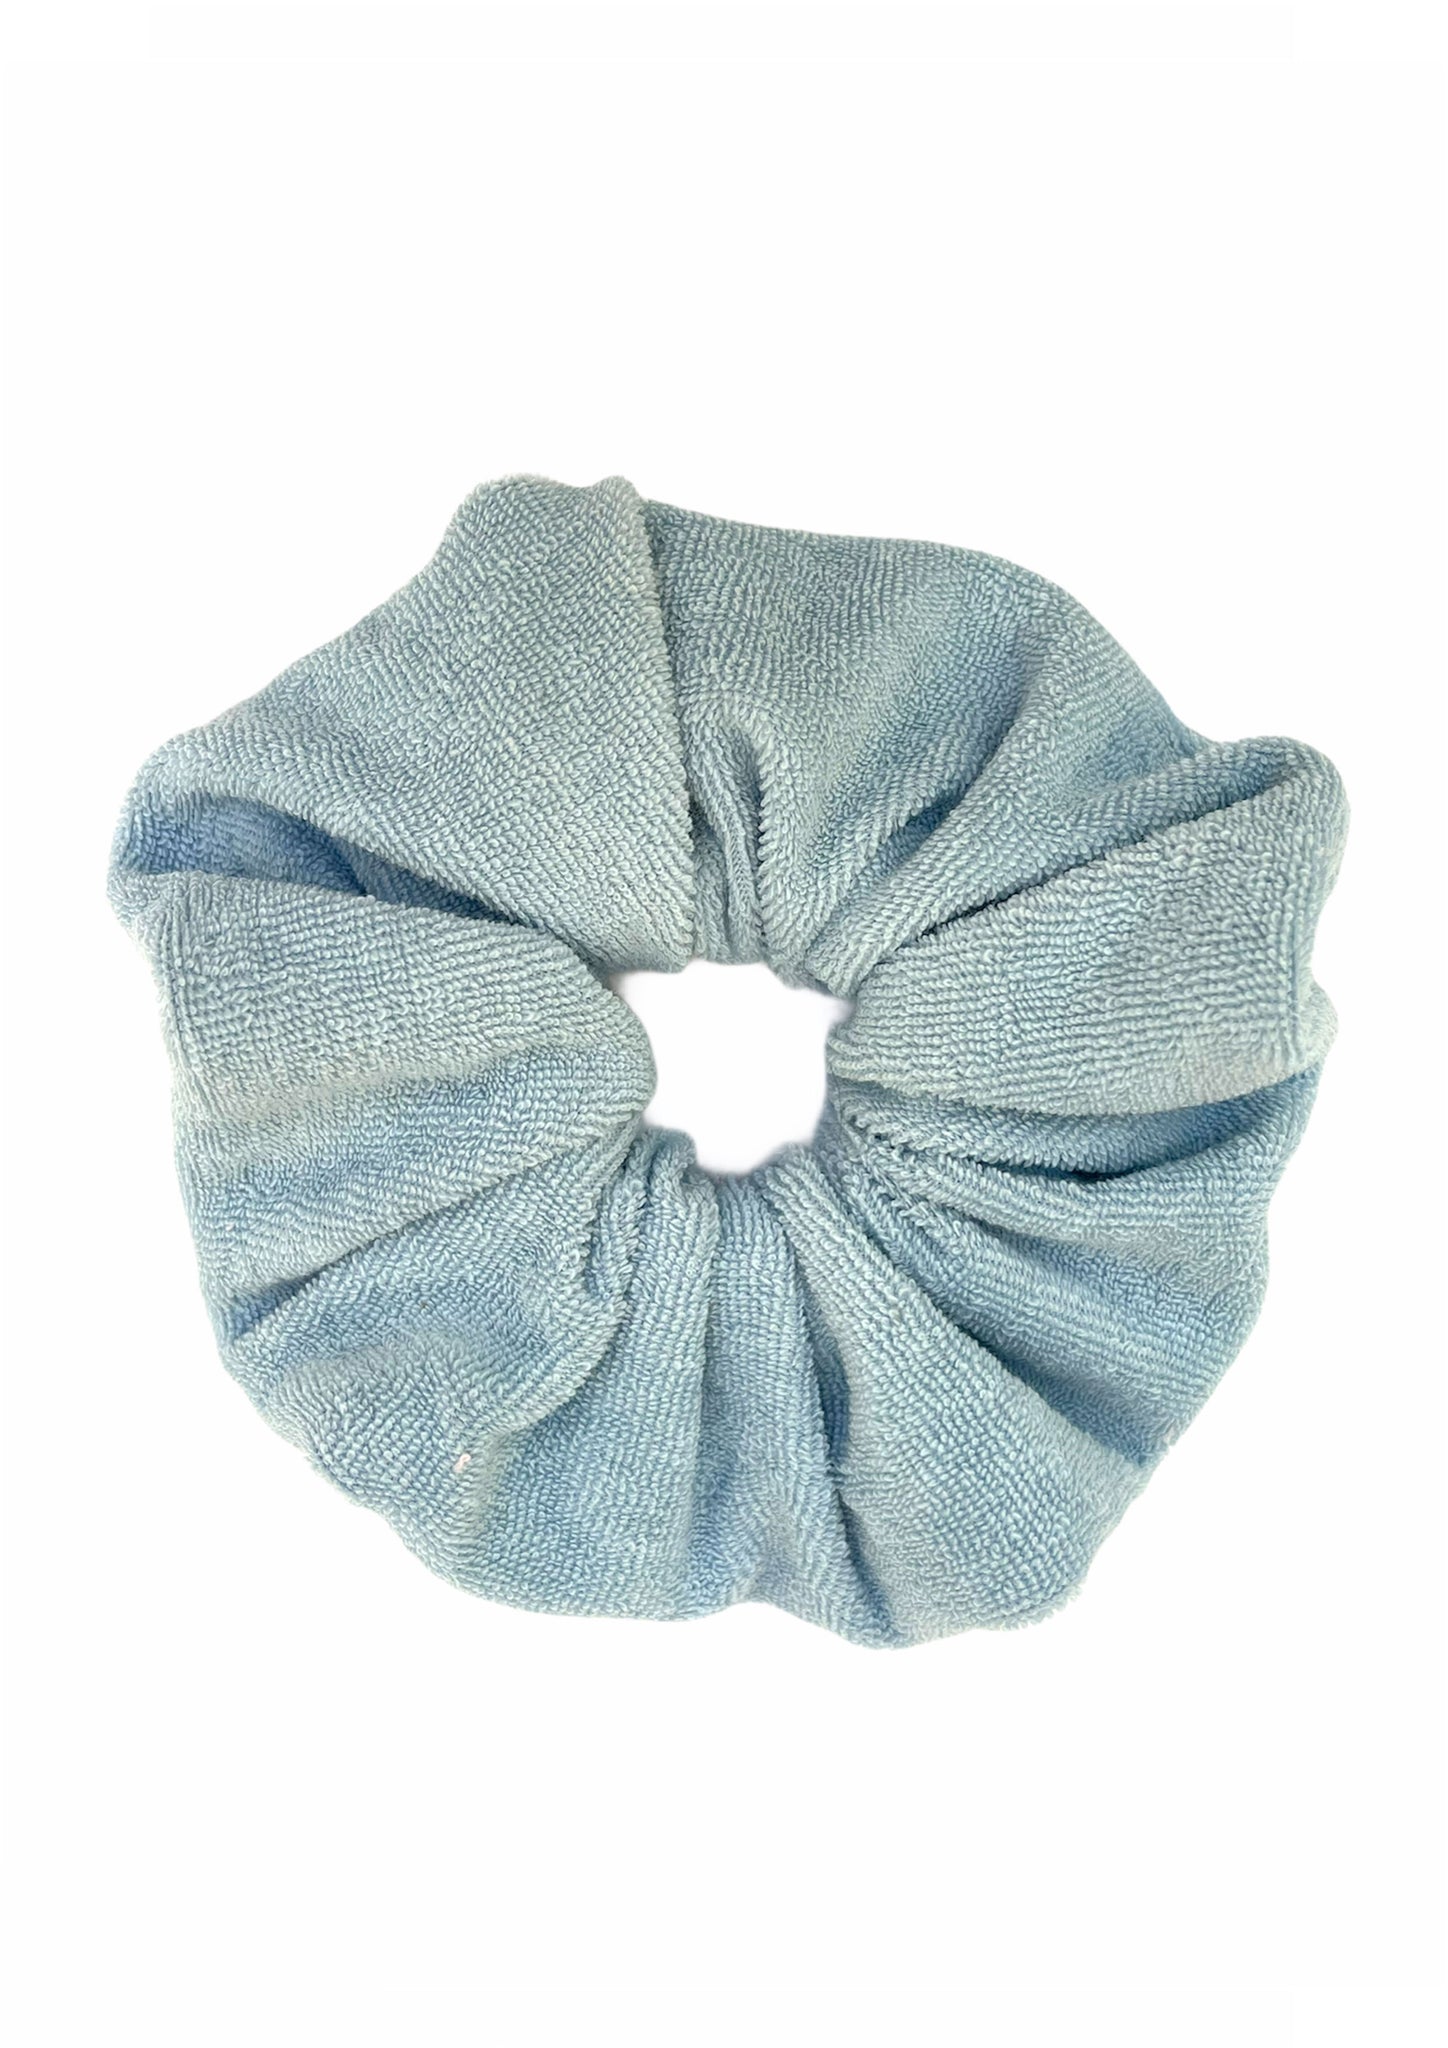 Baby Blue Towel Scrunchie